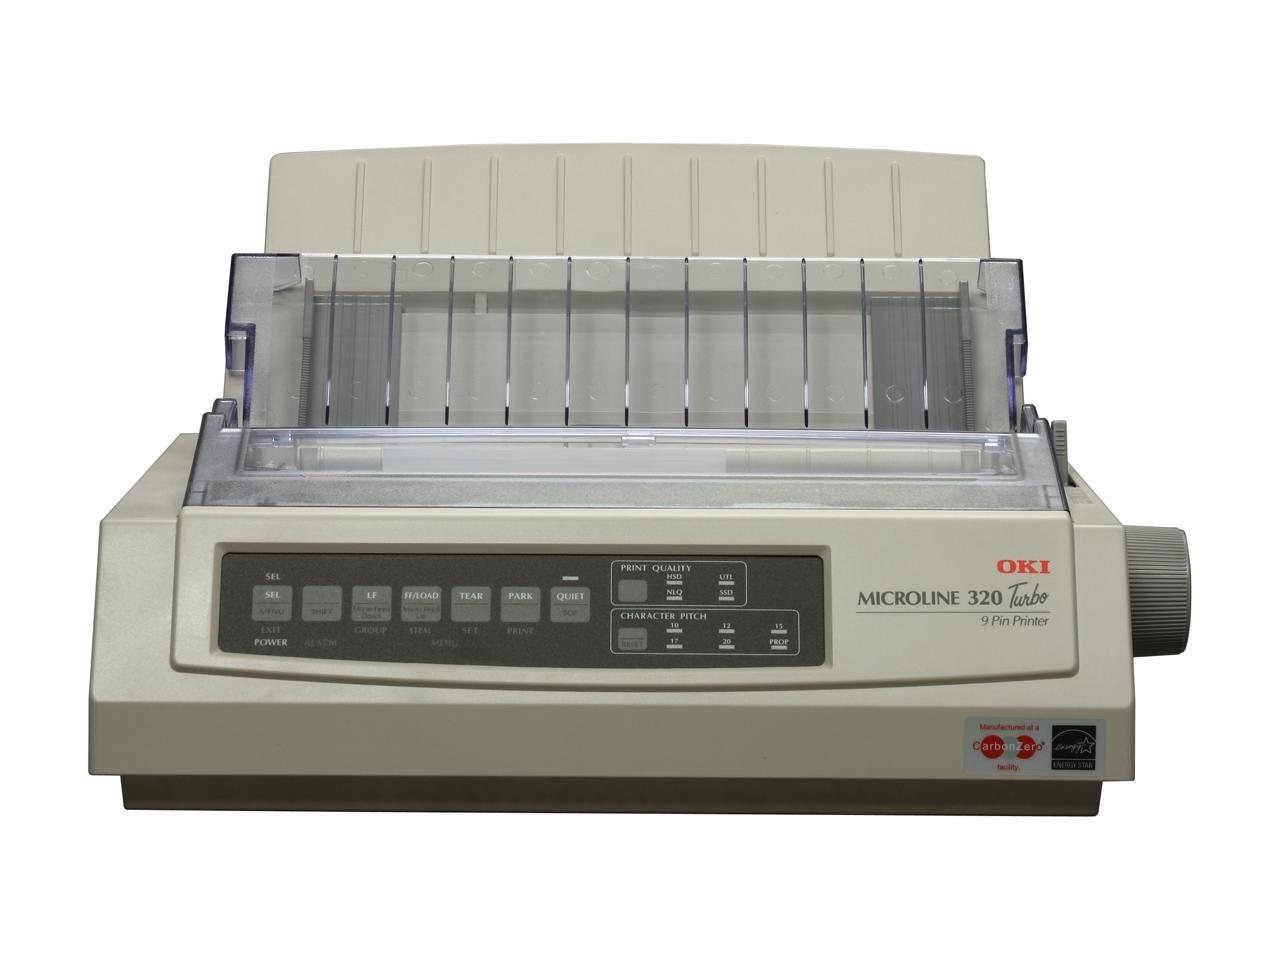 okidata microline 320 turbo printers with usb interface